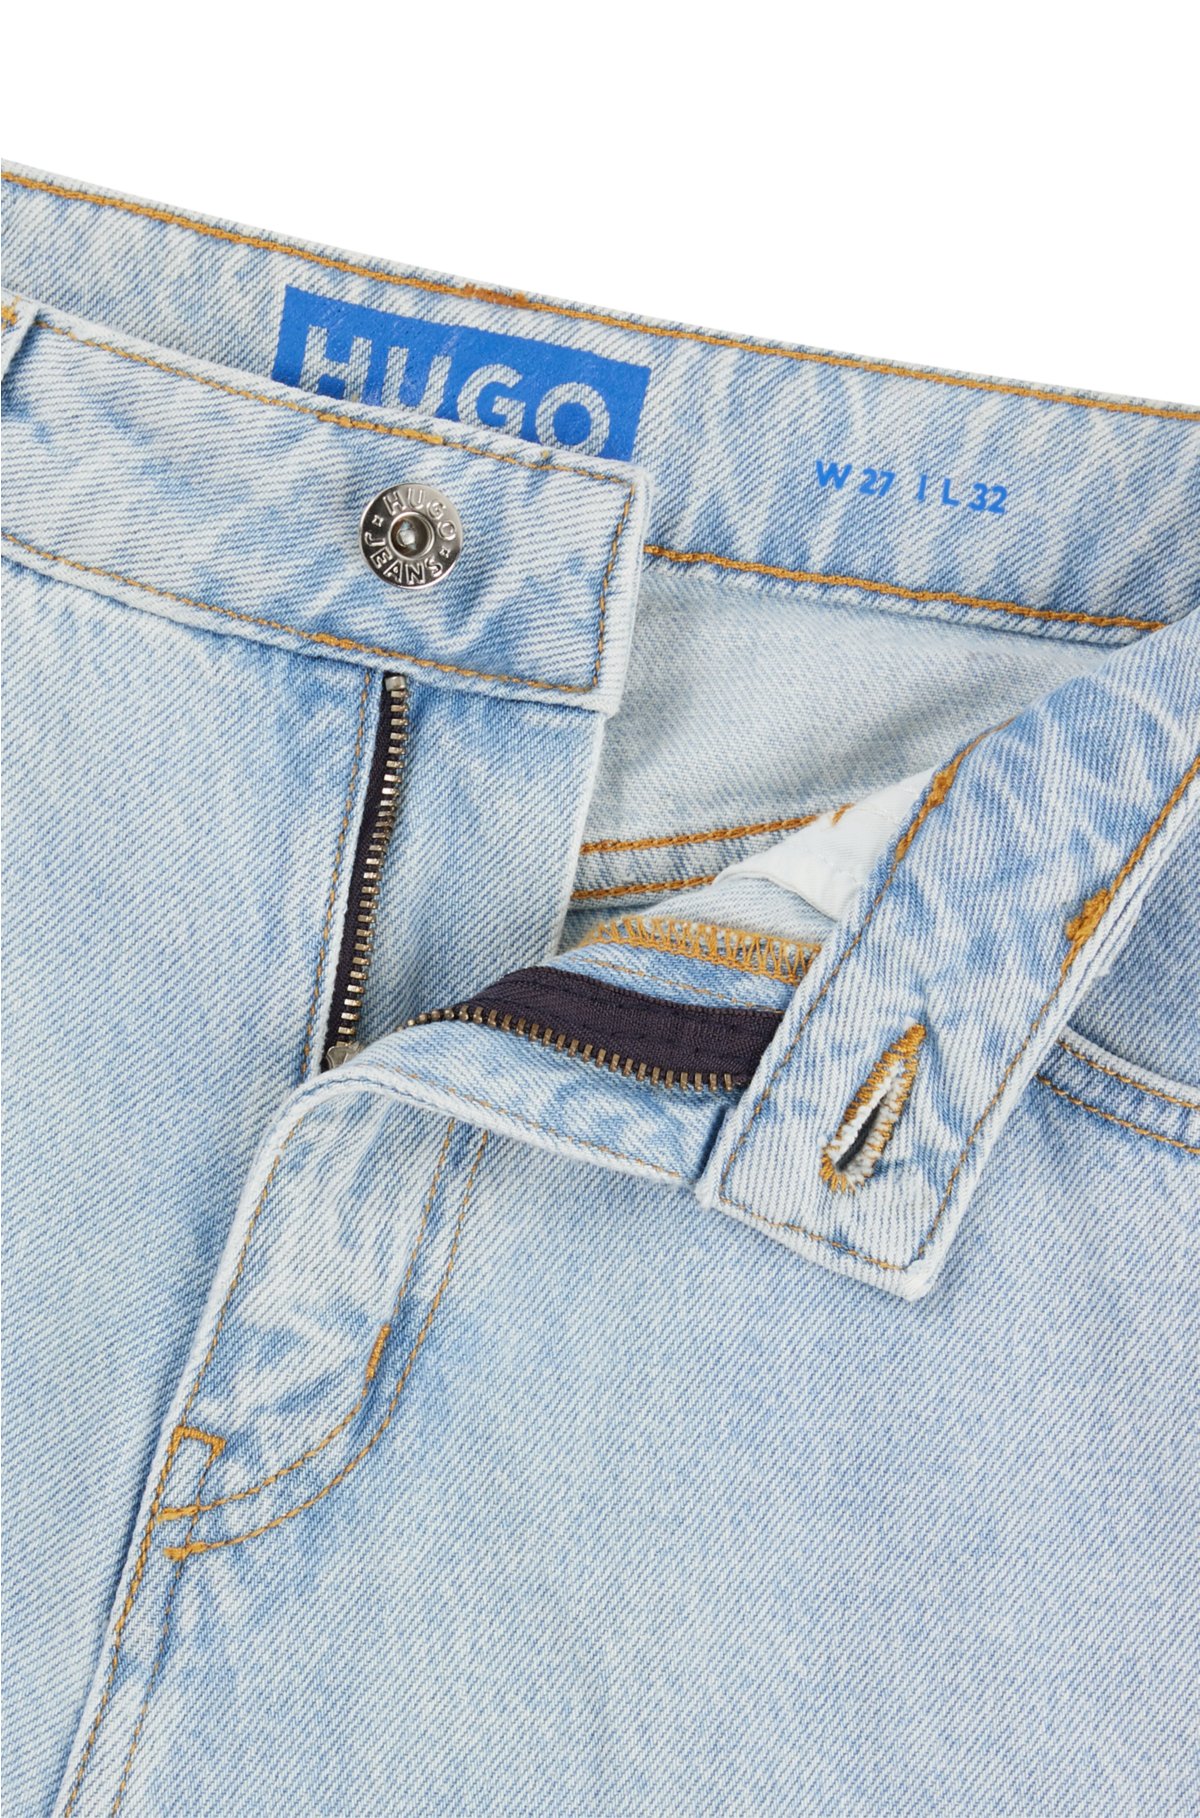 Loose-fit cargo jeans in aqua cotton denim, Light Blue